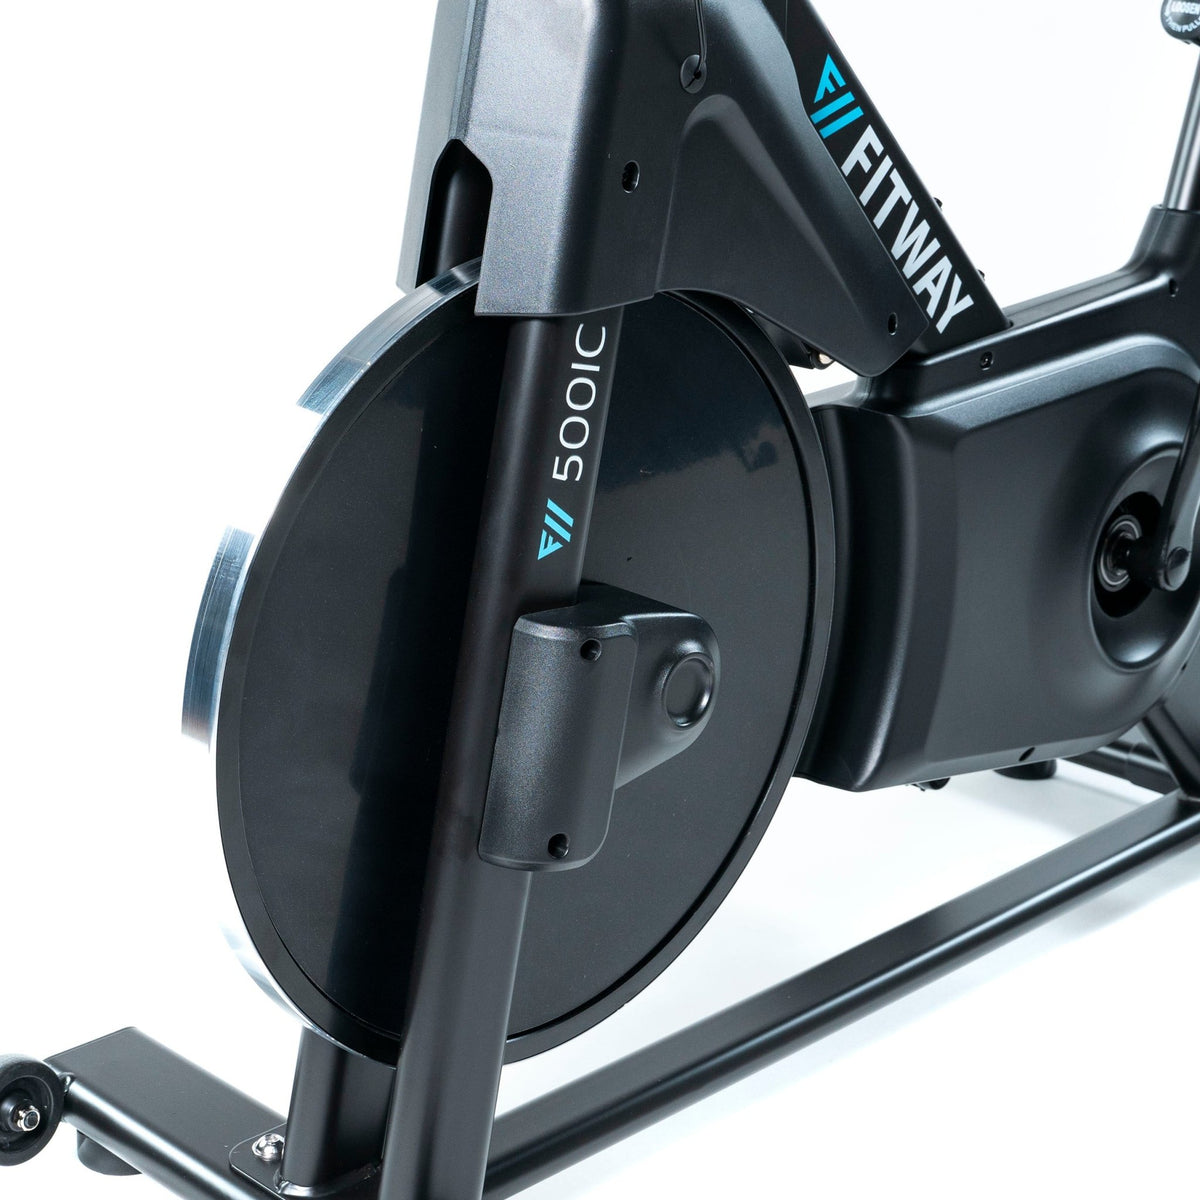 FitWay Equip. 500IC Indoor Cycle wheels view 